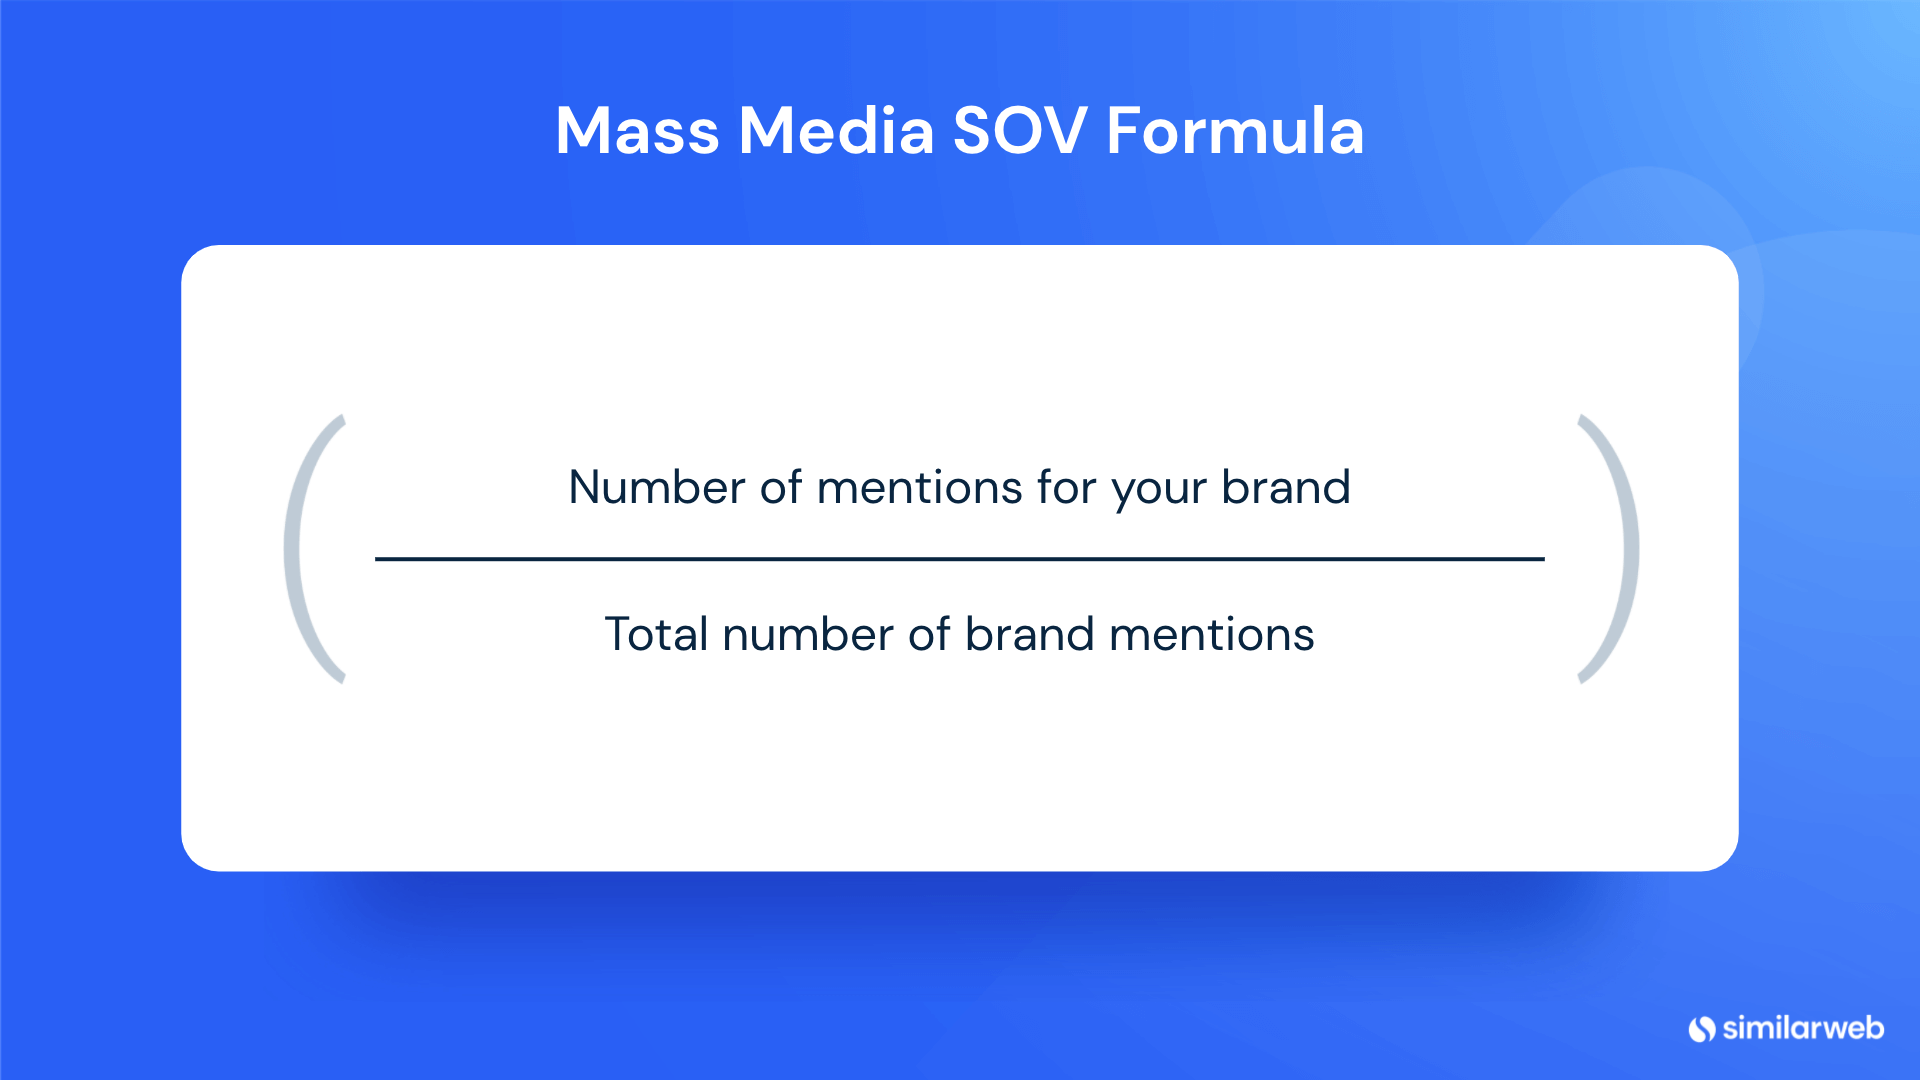 Mass media share of voice formula